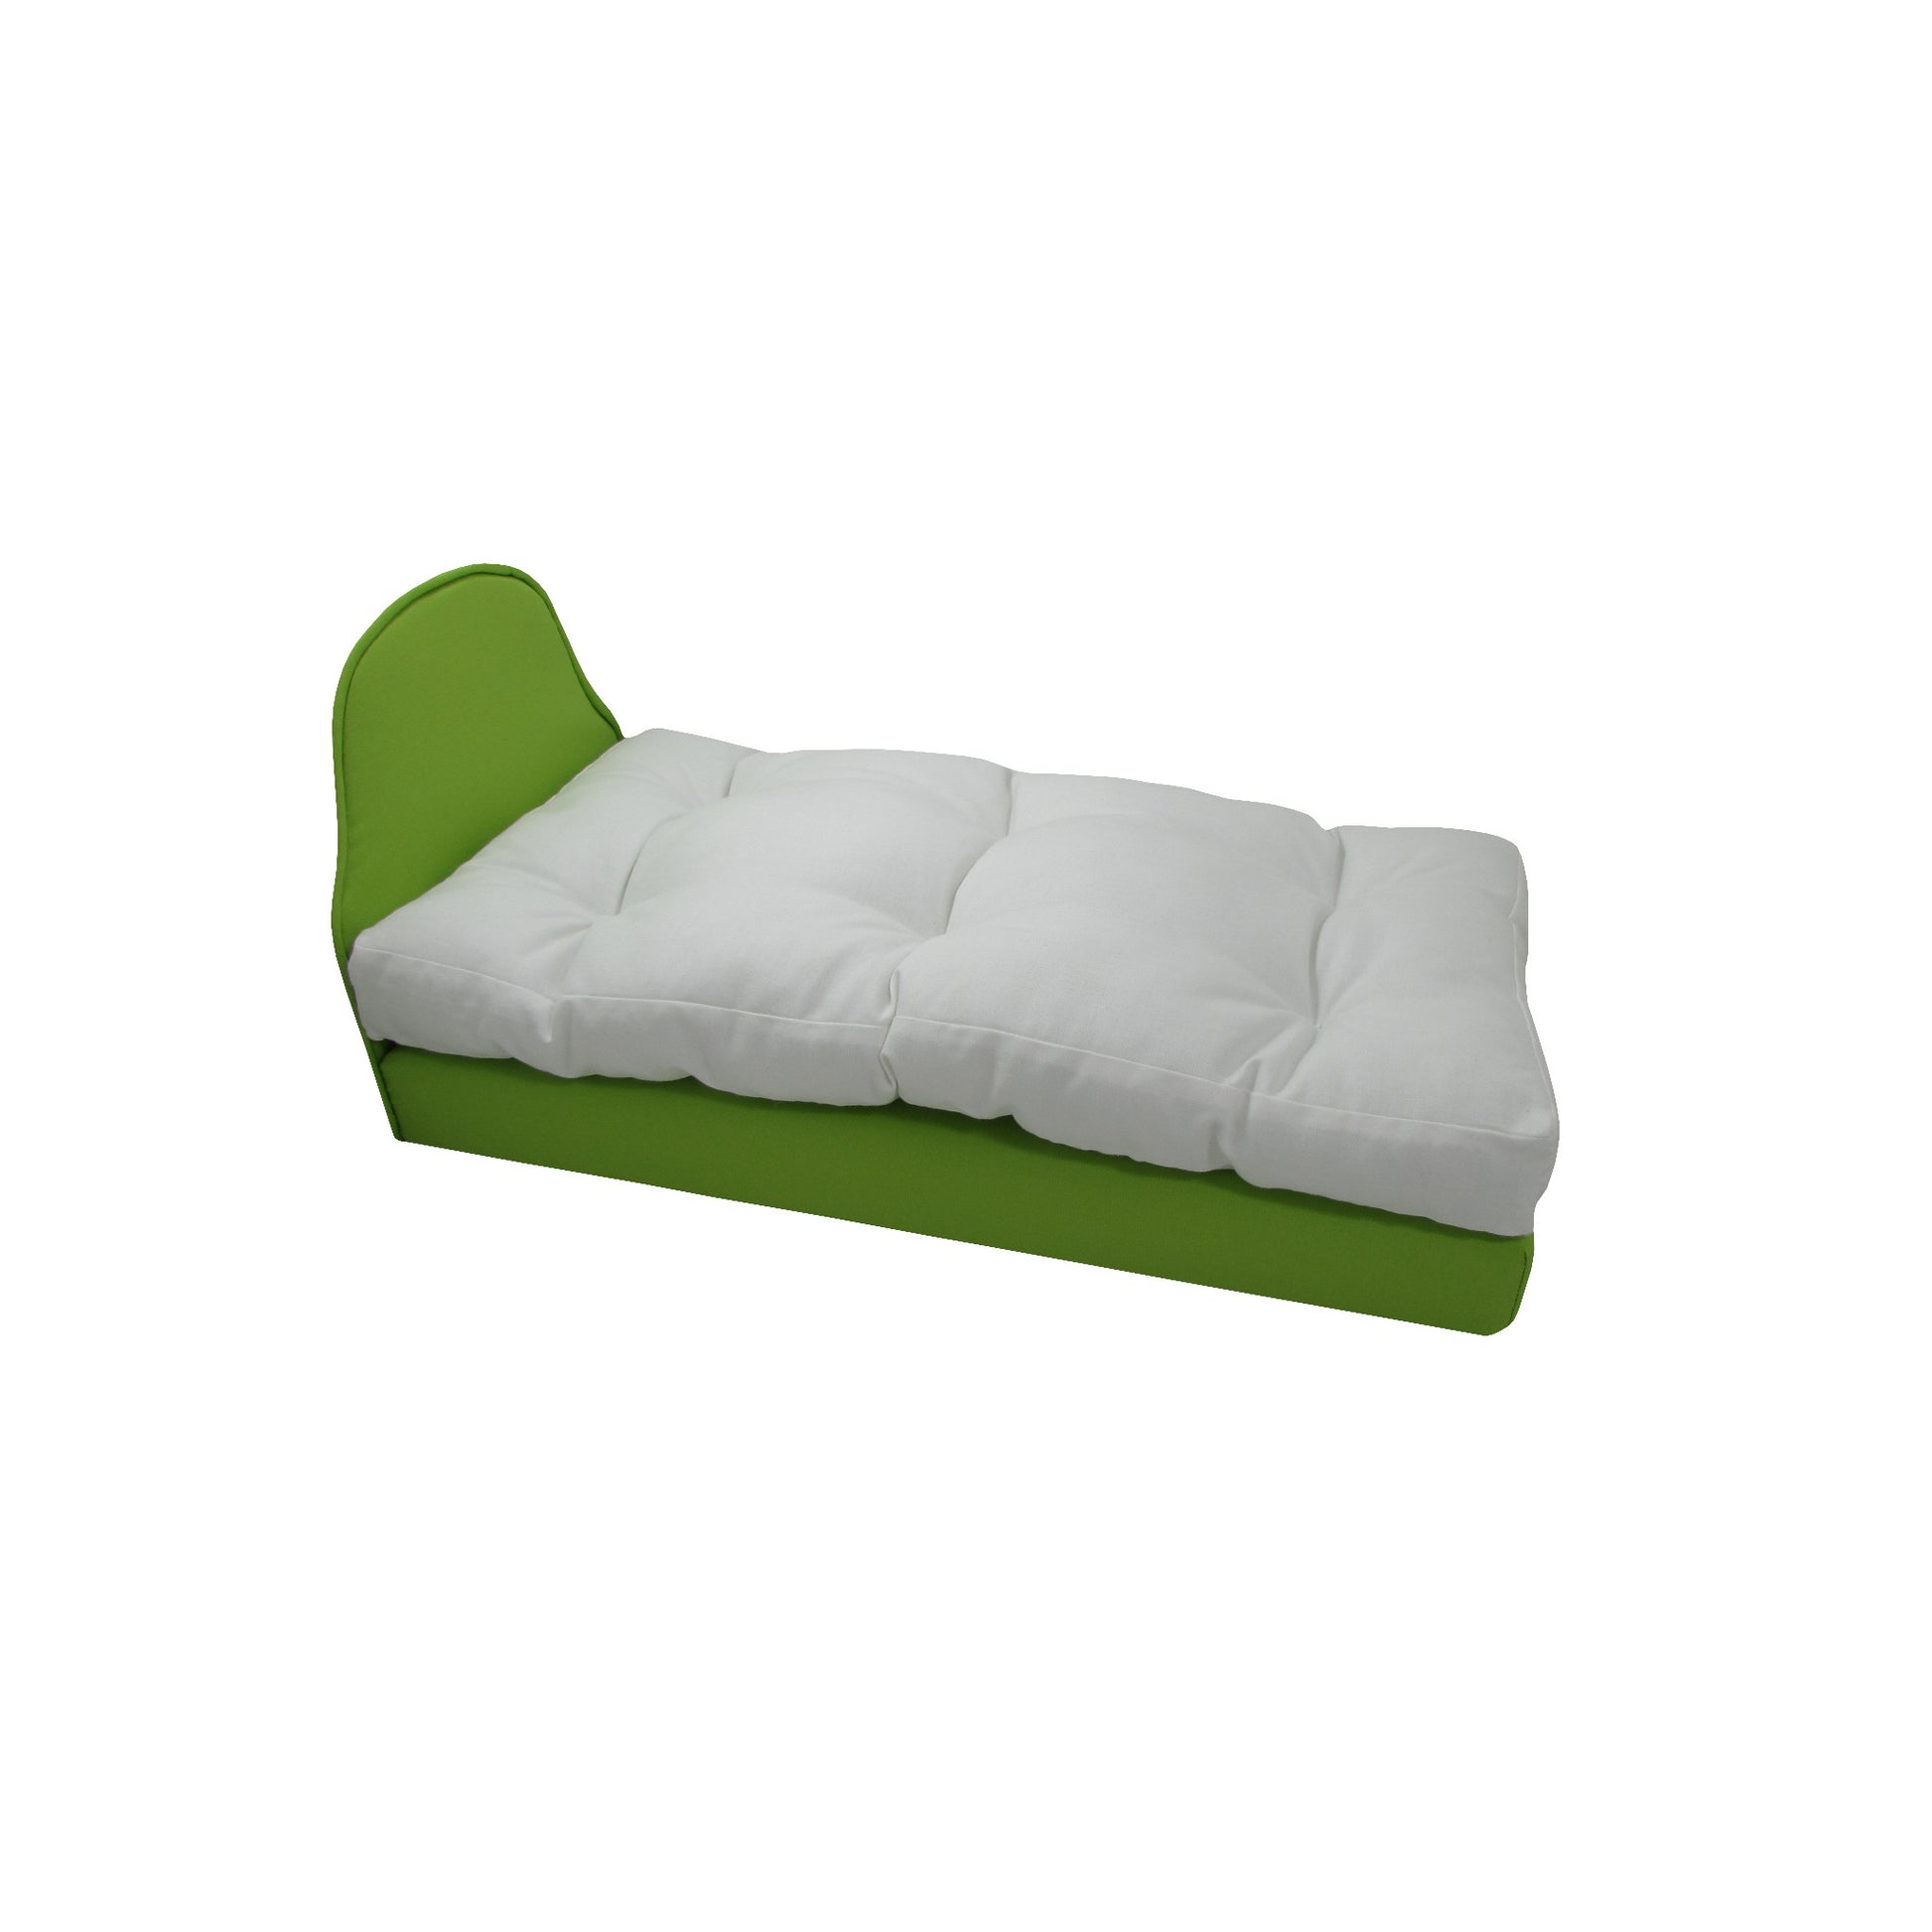 Upholstered Light Green Doll Bed for 14.5-inch dolls